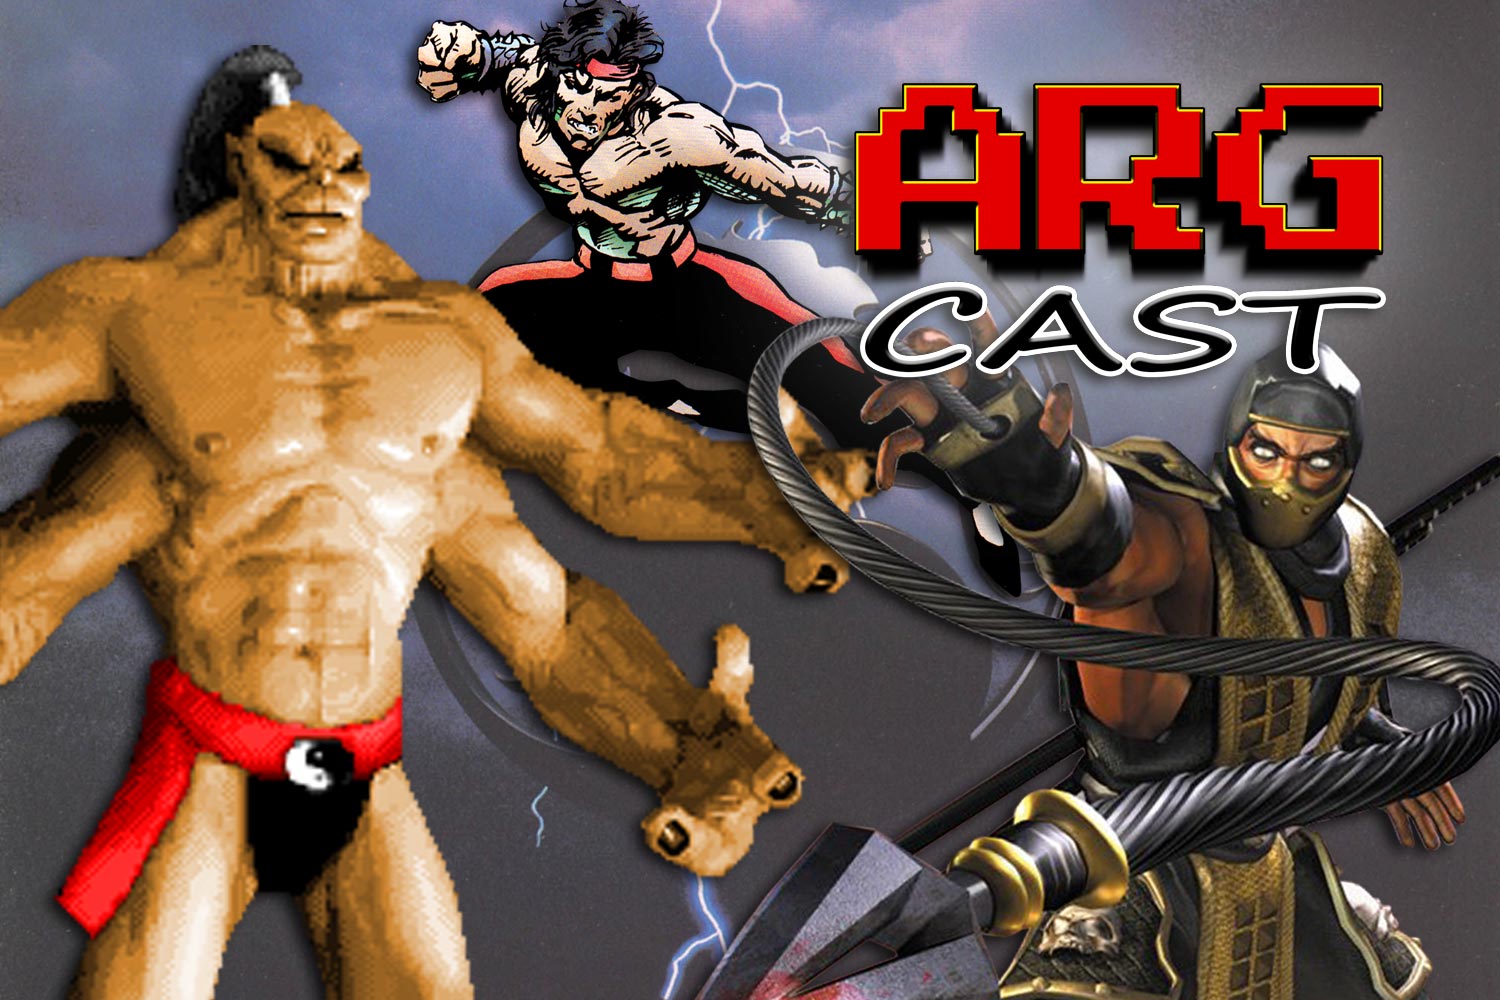 ARGcast #158: Celebrating the Mortal Kombat Franchise